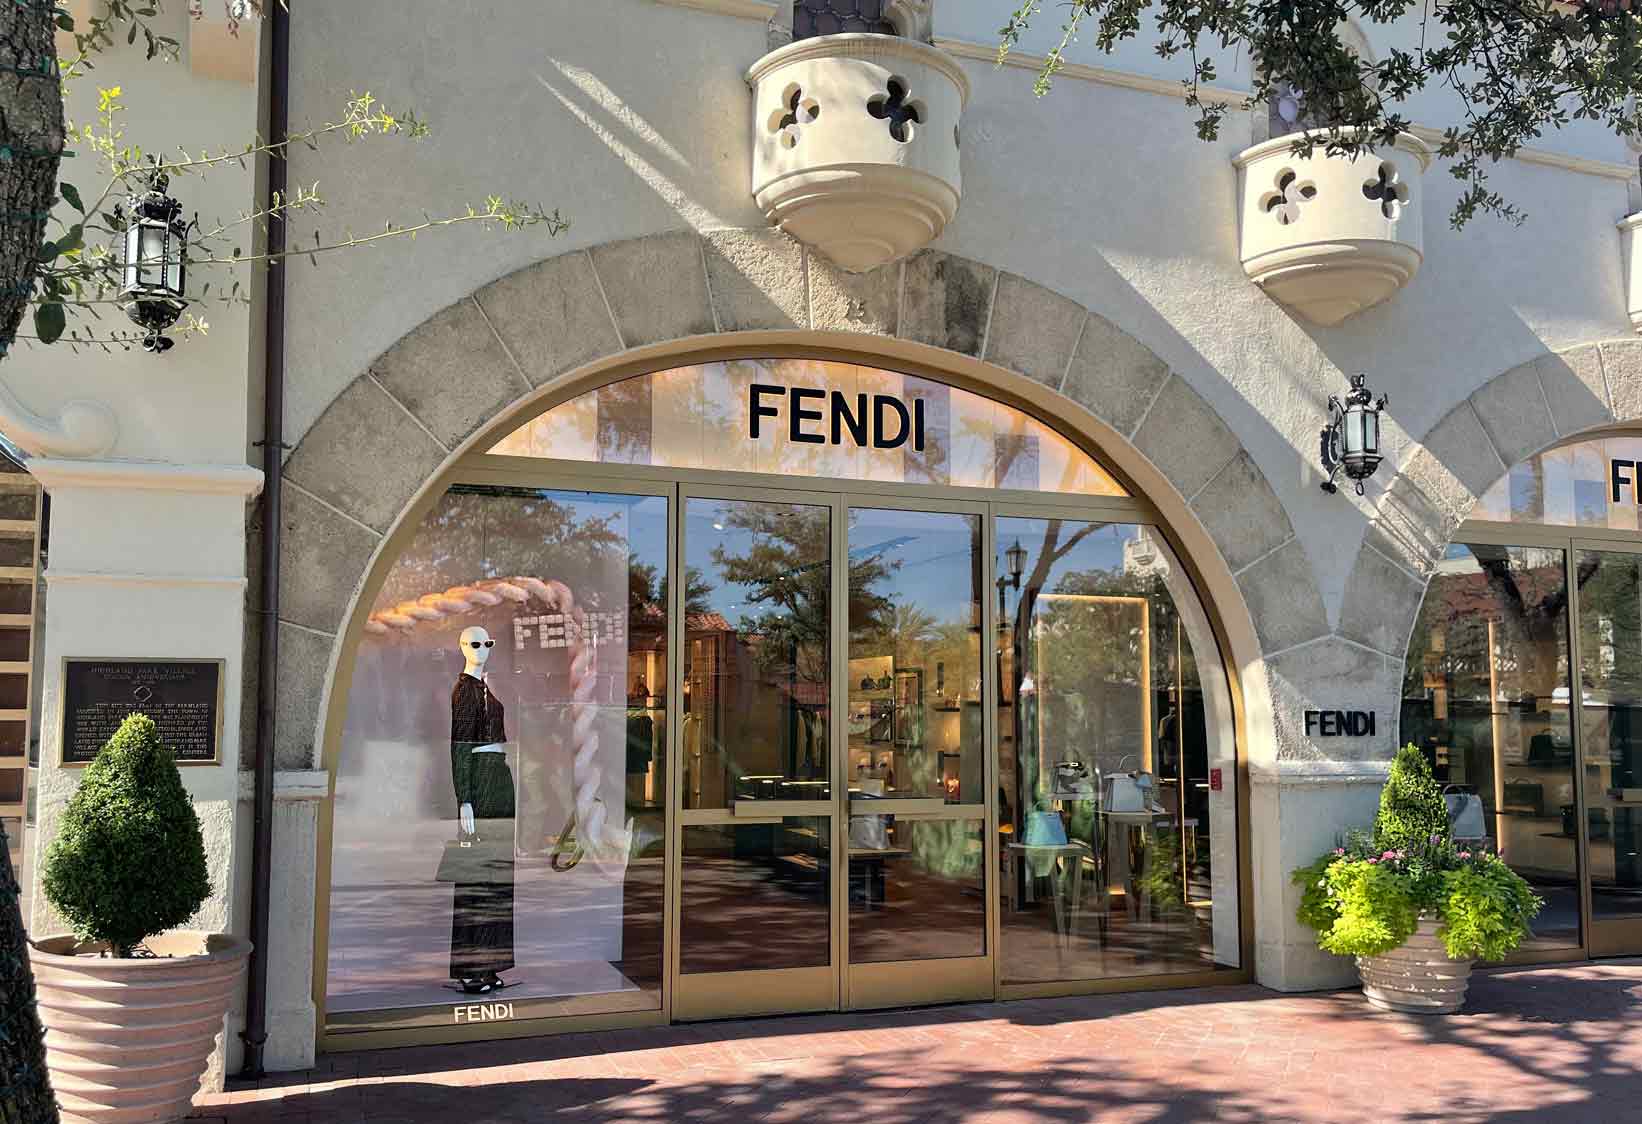 Fendi Store Front at Highland Park Village